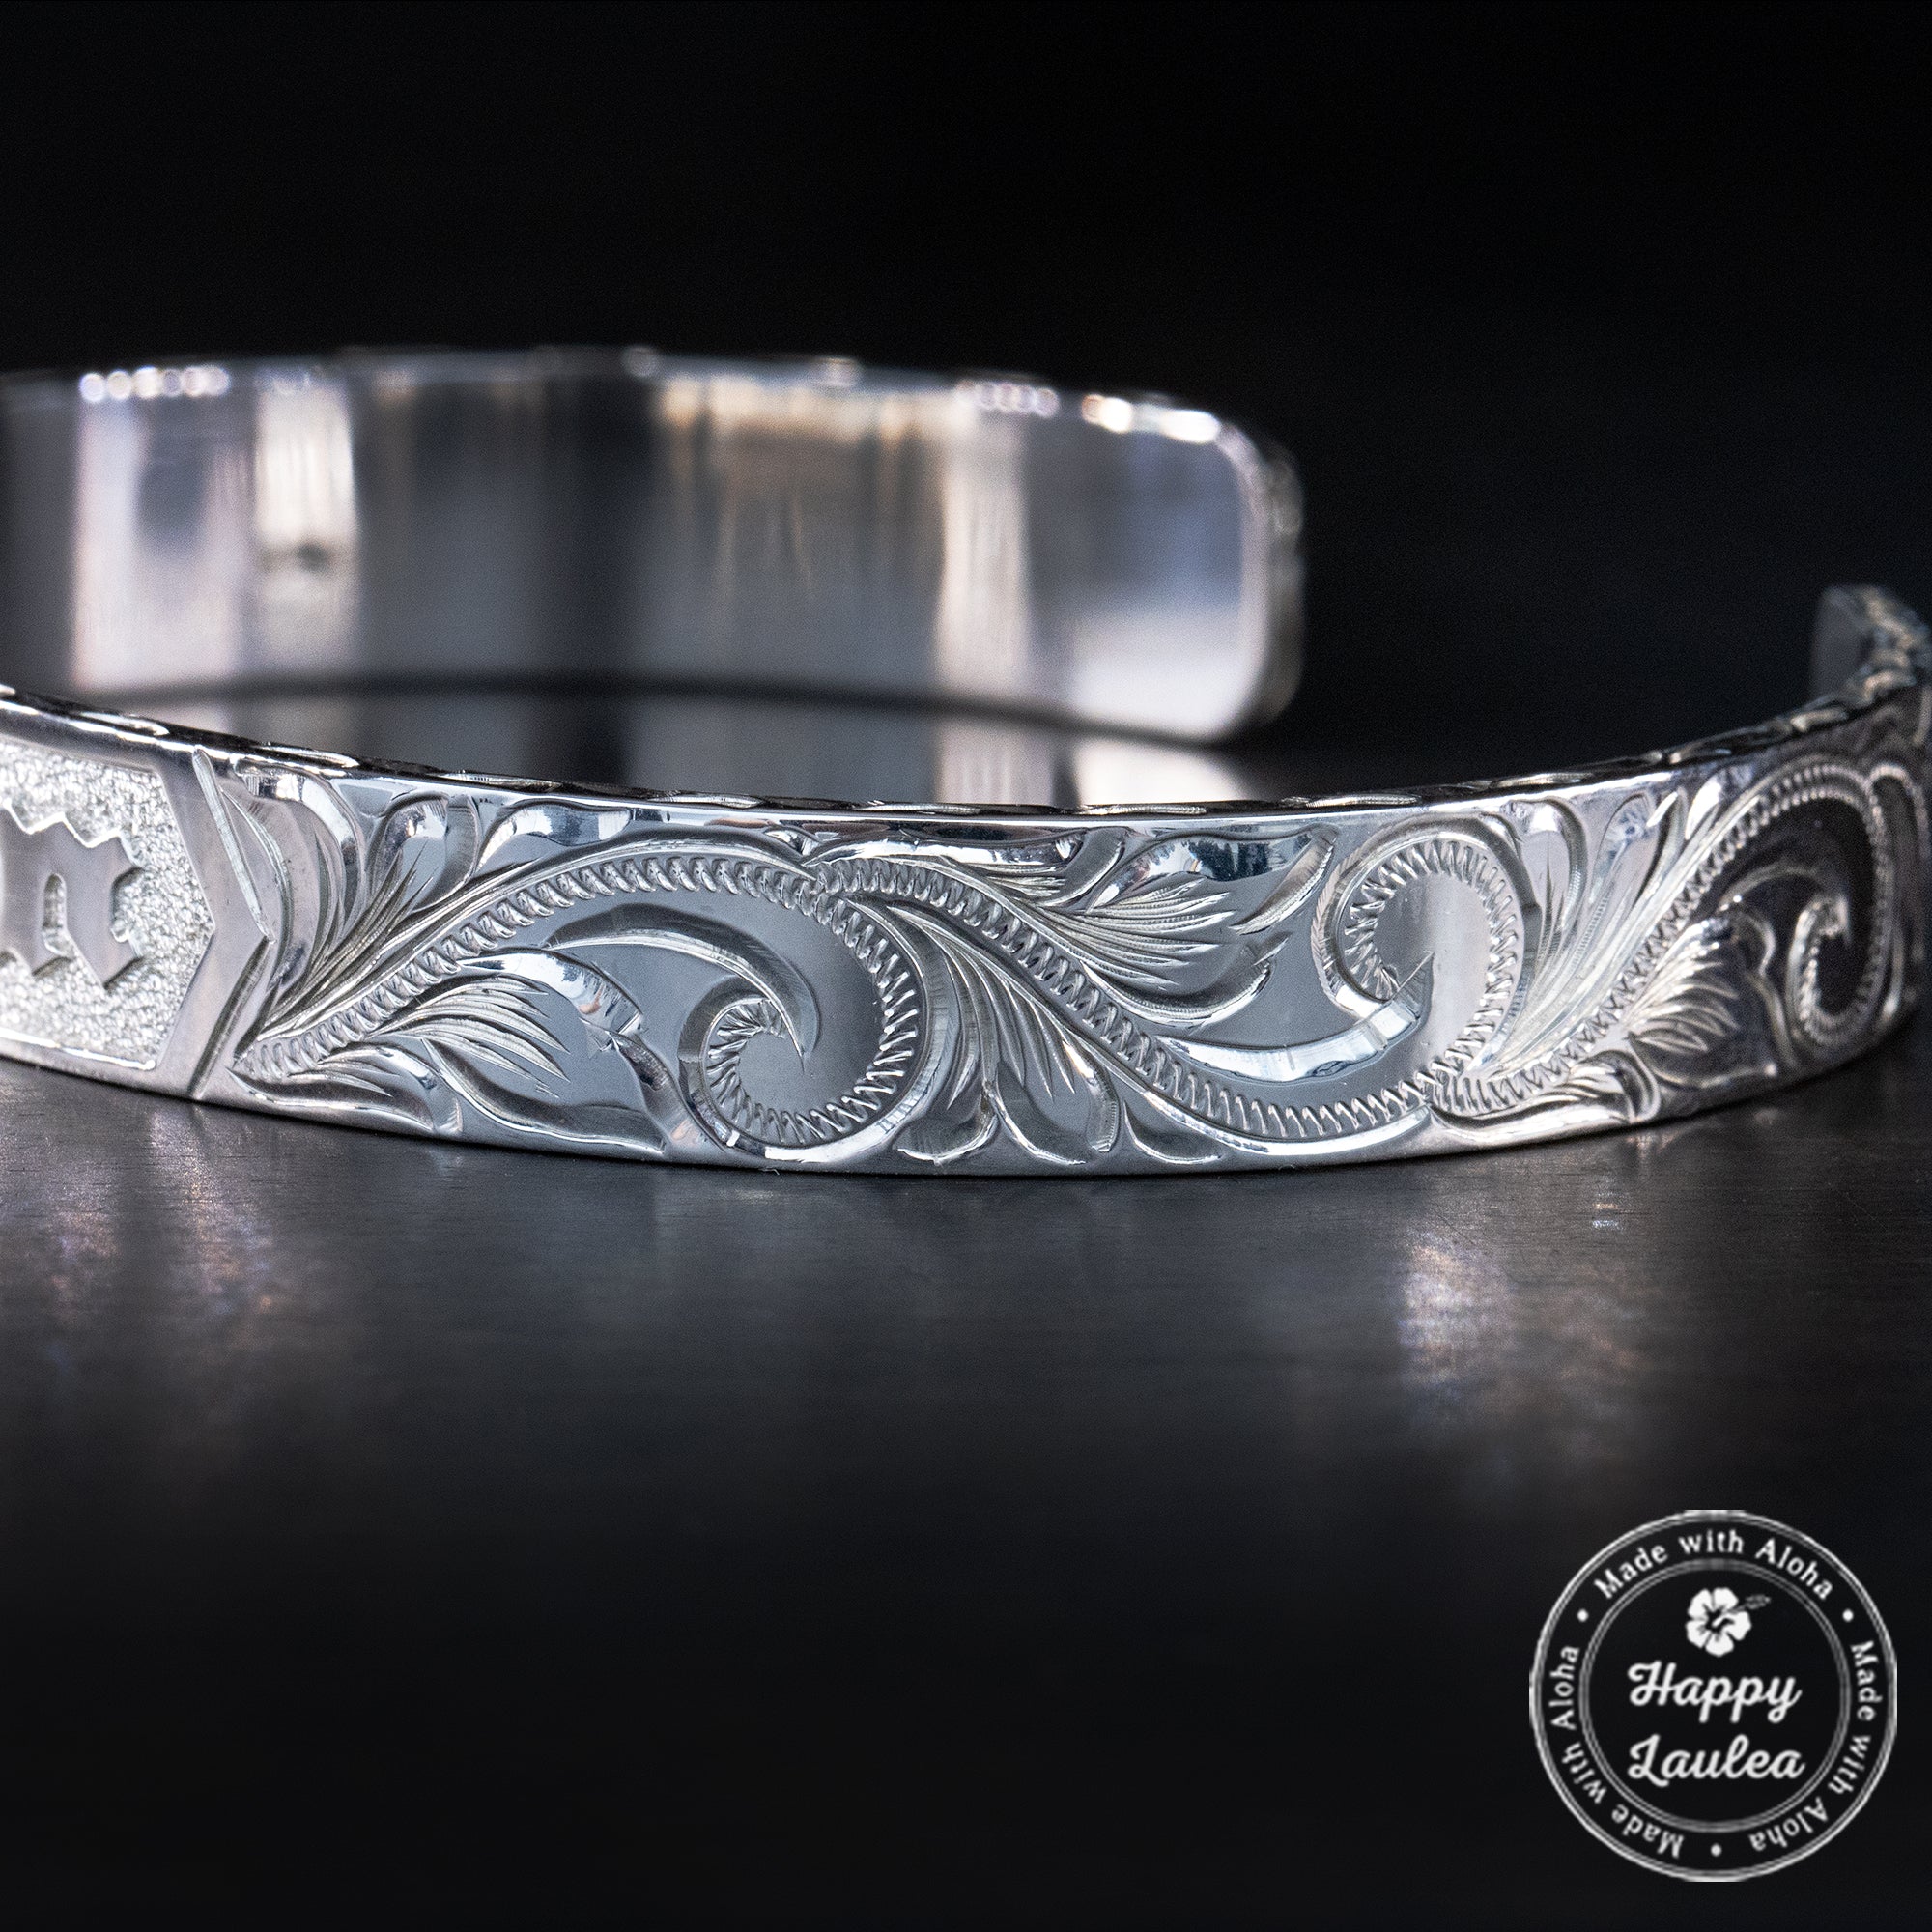 Sterling Silver Hawaiian Jewelry [10x2mm] Personalized Name Open Bracelet